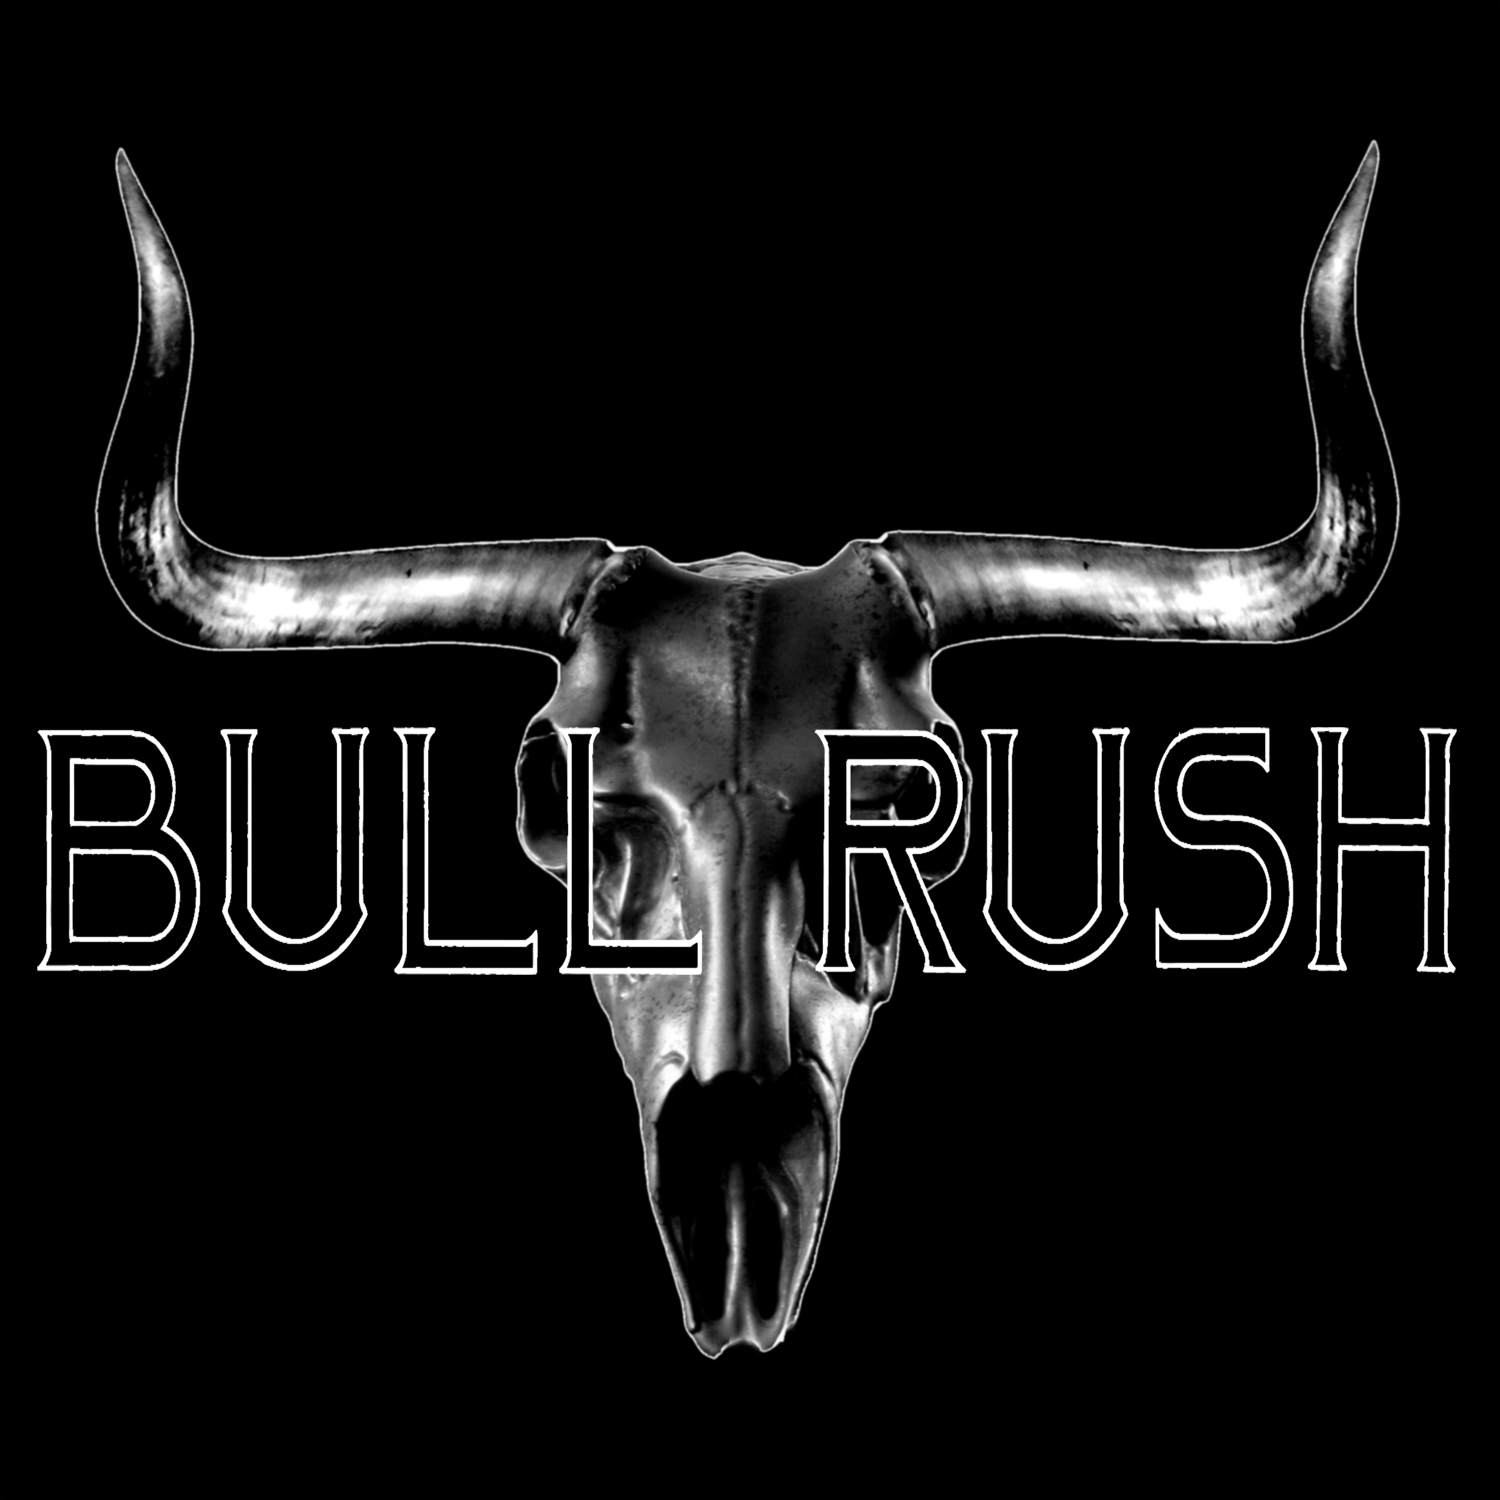 Bullrush